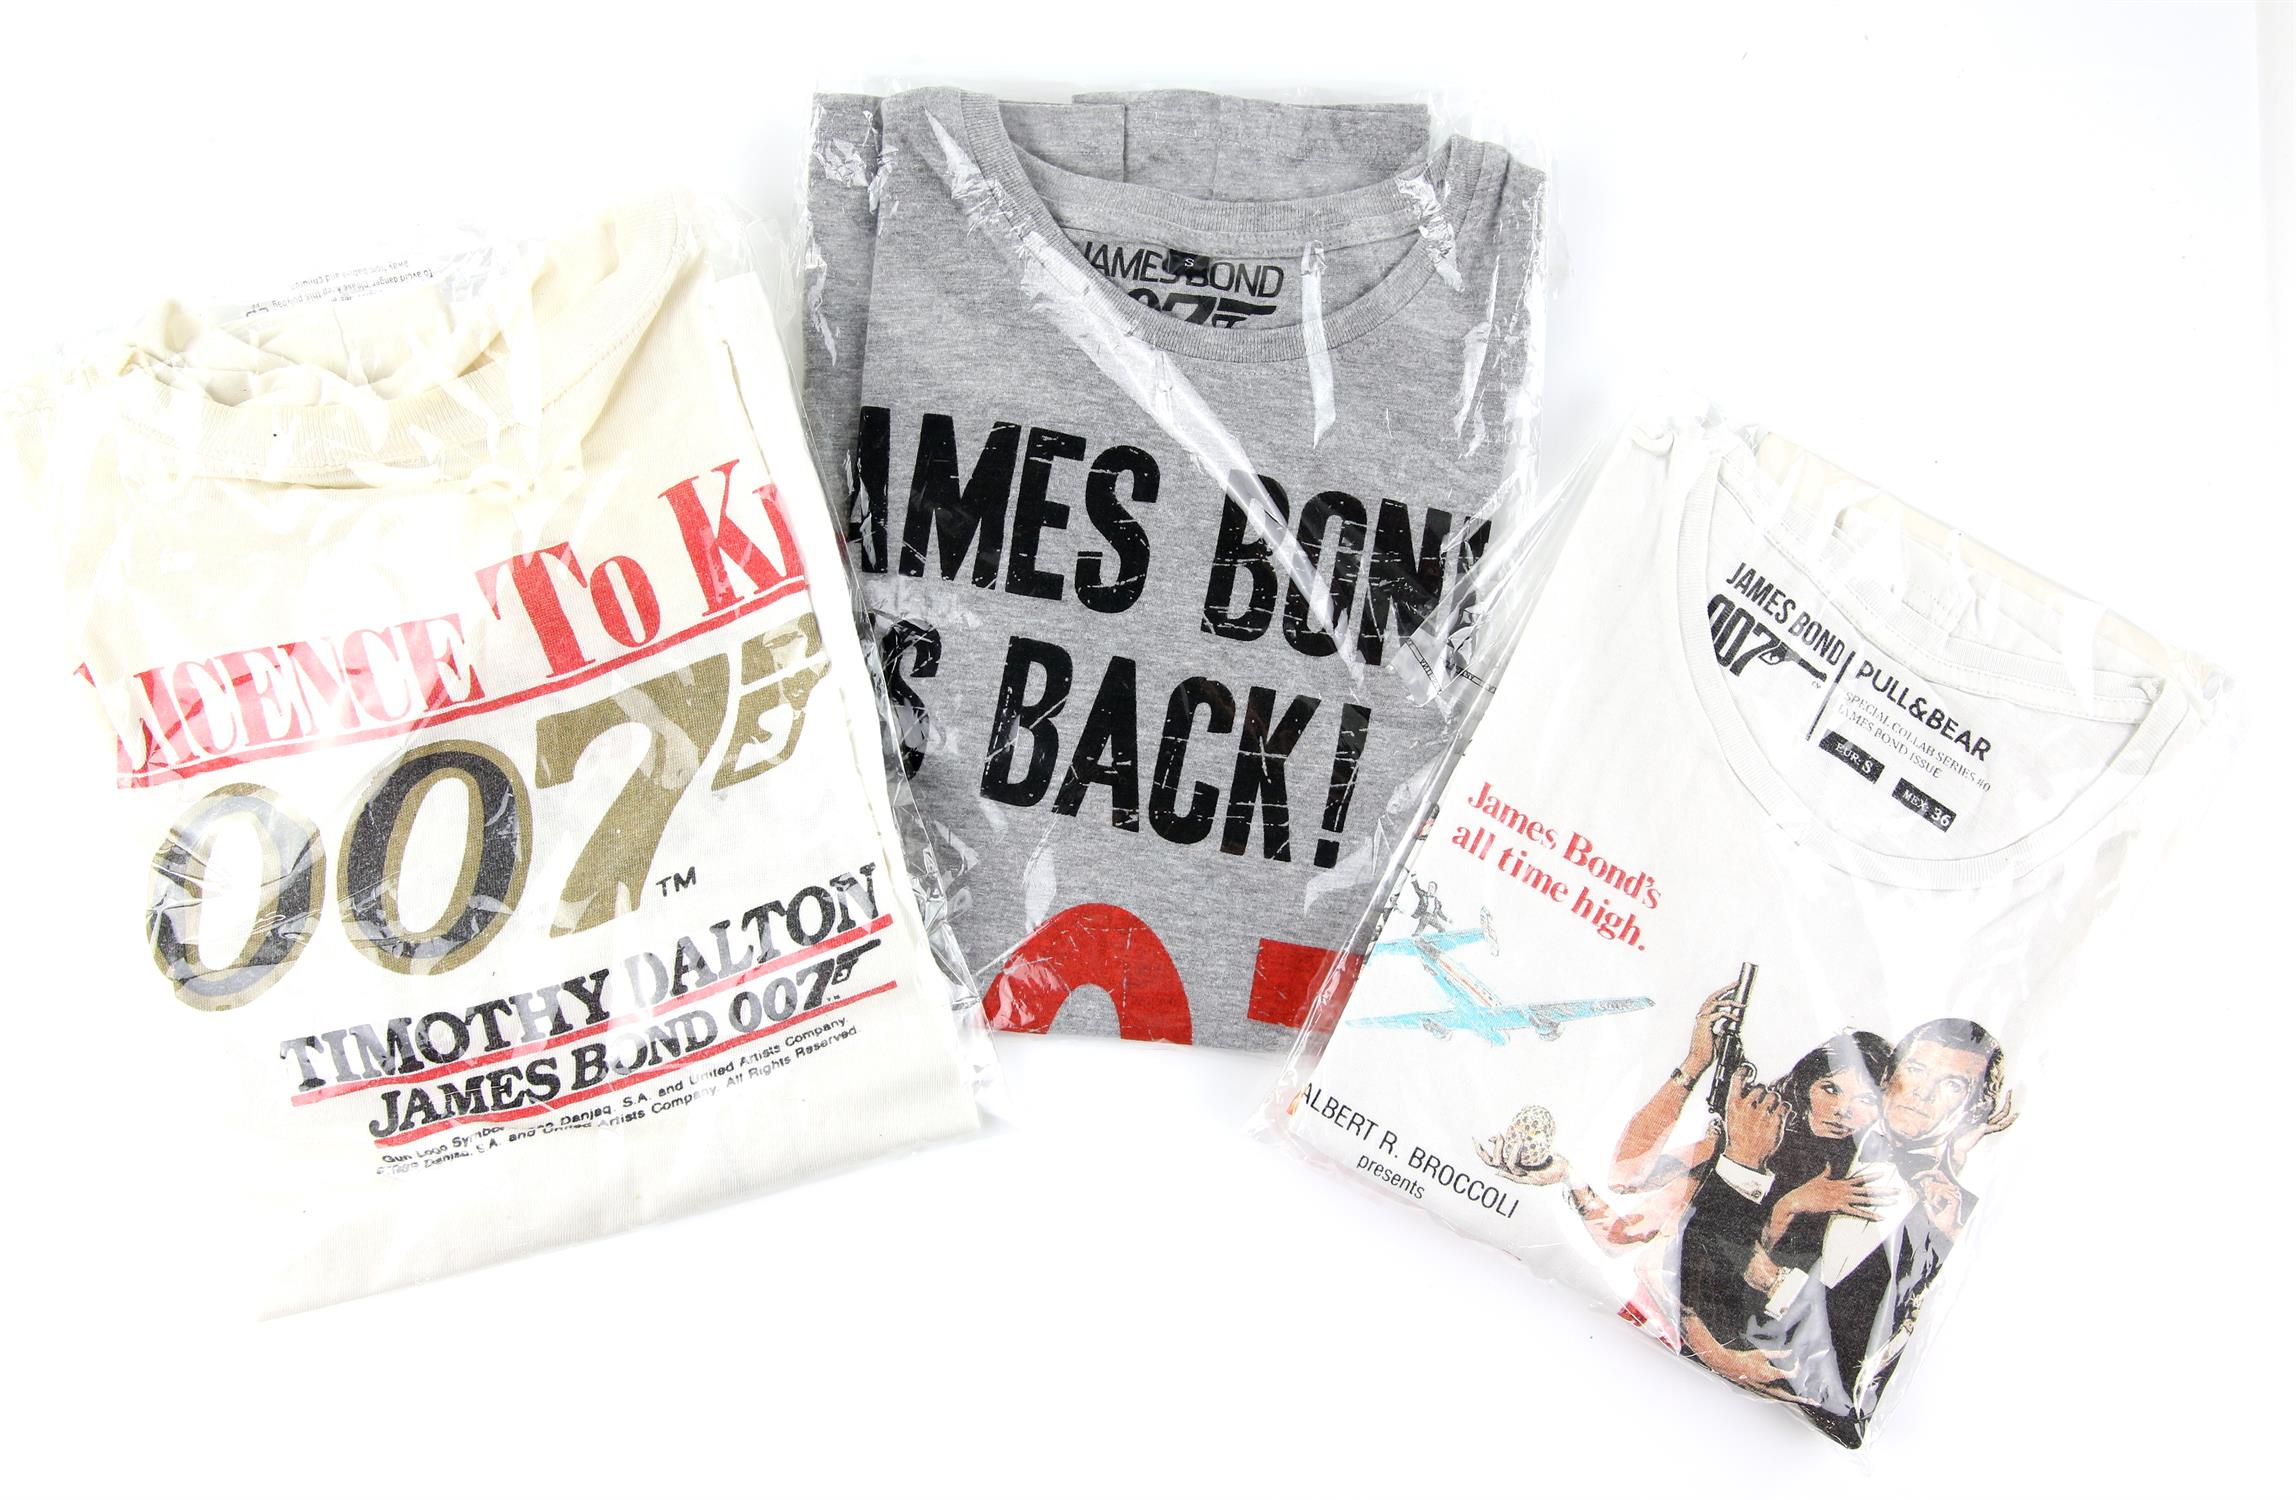 James Bond - three vintage T-shirts including Octopussy, size S, James Bond is Back, size S,